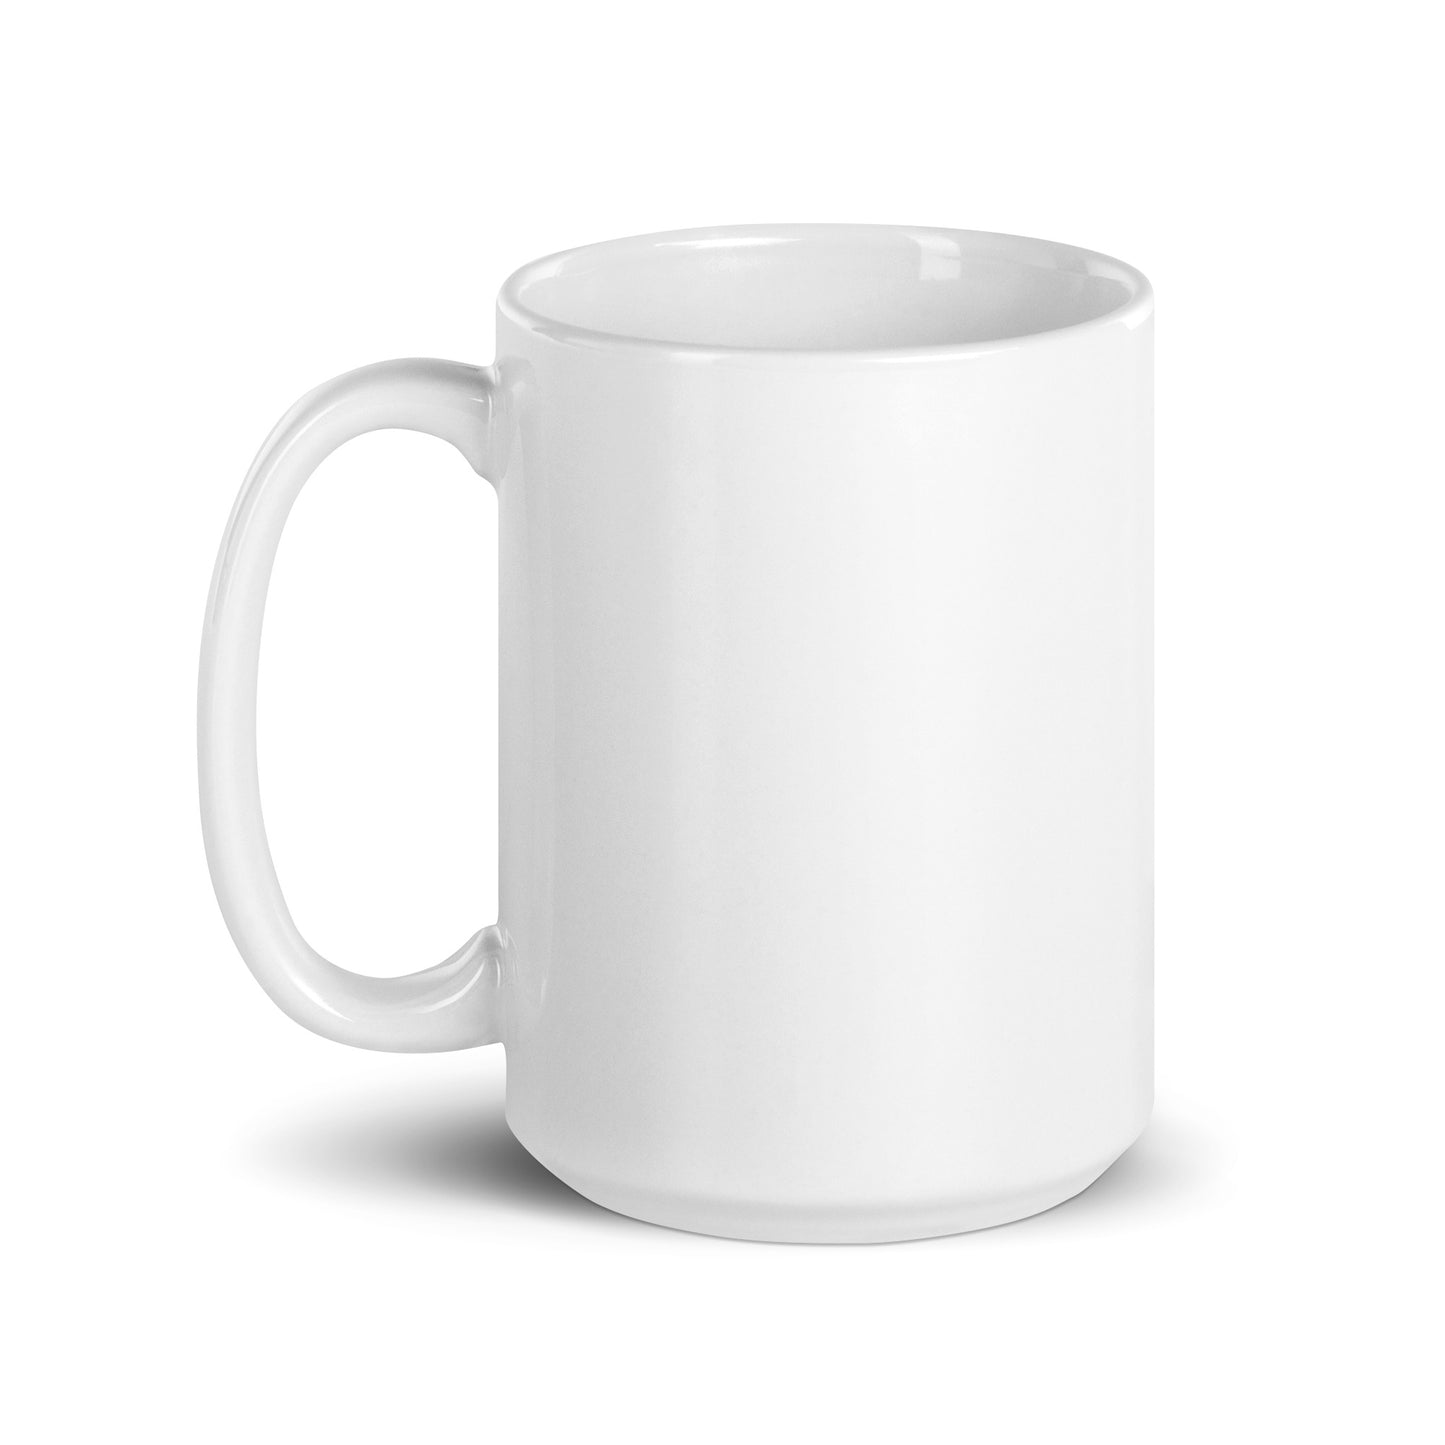 "Self Care" White Glossy Mug